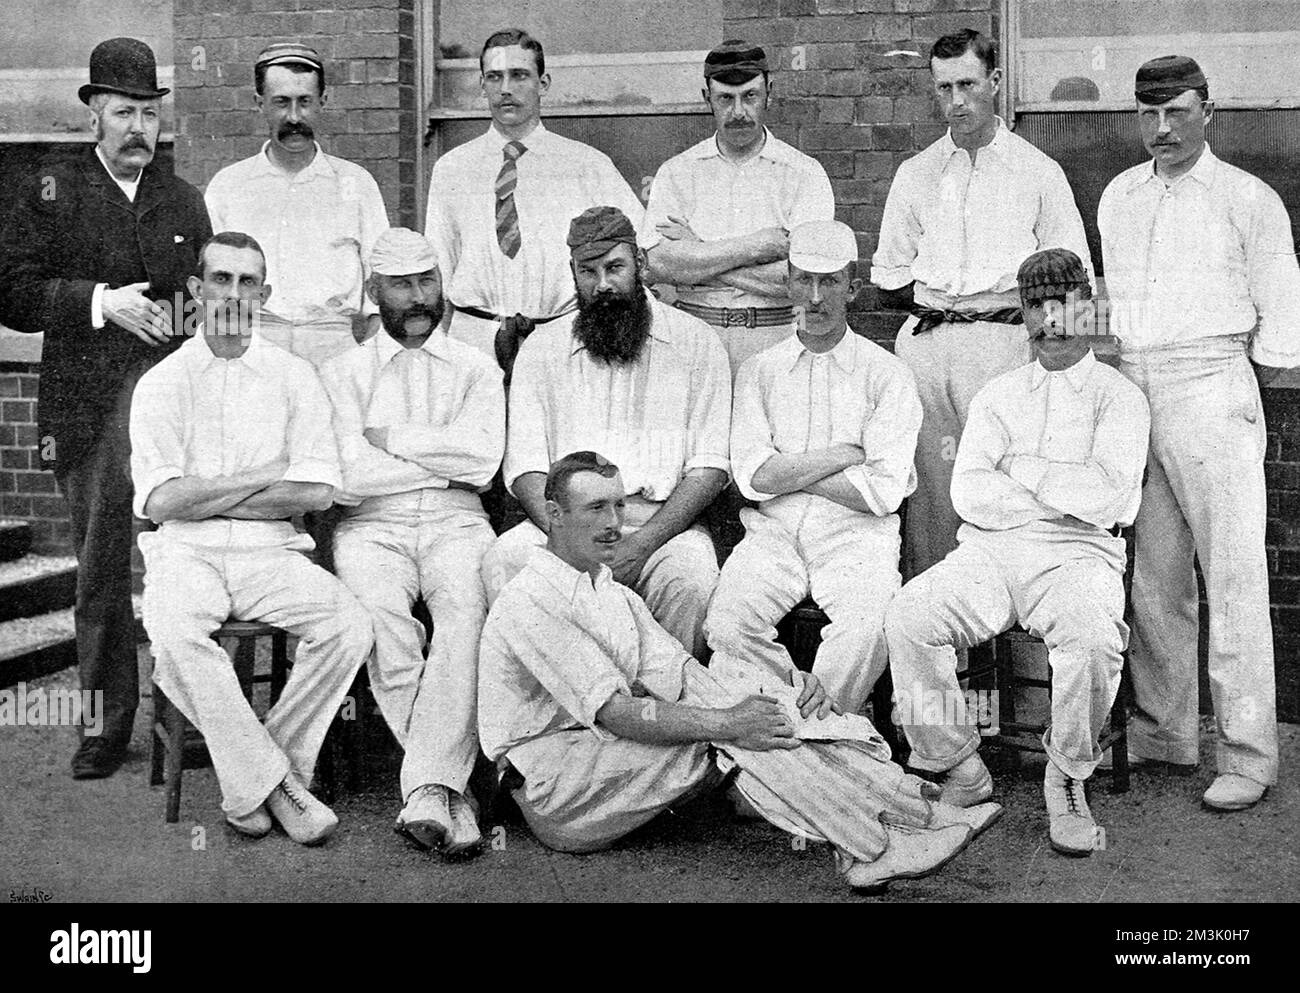 Foto des Gloucestershire County Cricket Teams für die Saison 1892. Hintere Reihe, von links nach rechts: J.Smith (Scorer), E. Sainsbury, S.A.P. Kitcat, Roberts, Murch, Maler. Mittlere Reihe, von links nach rechts: Captain A.H. Luard, EM Grace, Dr. W.G. Grace (Kapitän), Woof, O.G. Radcliffe. Erste Reihe: Brett. Stockfoto